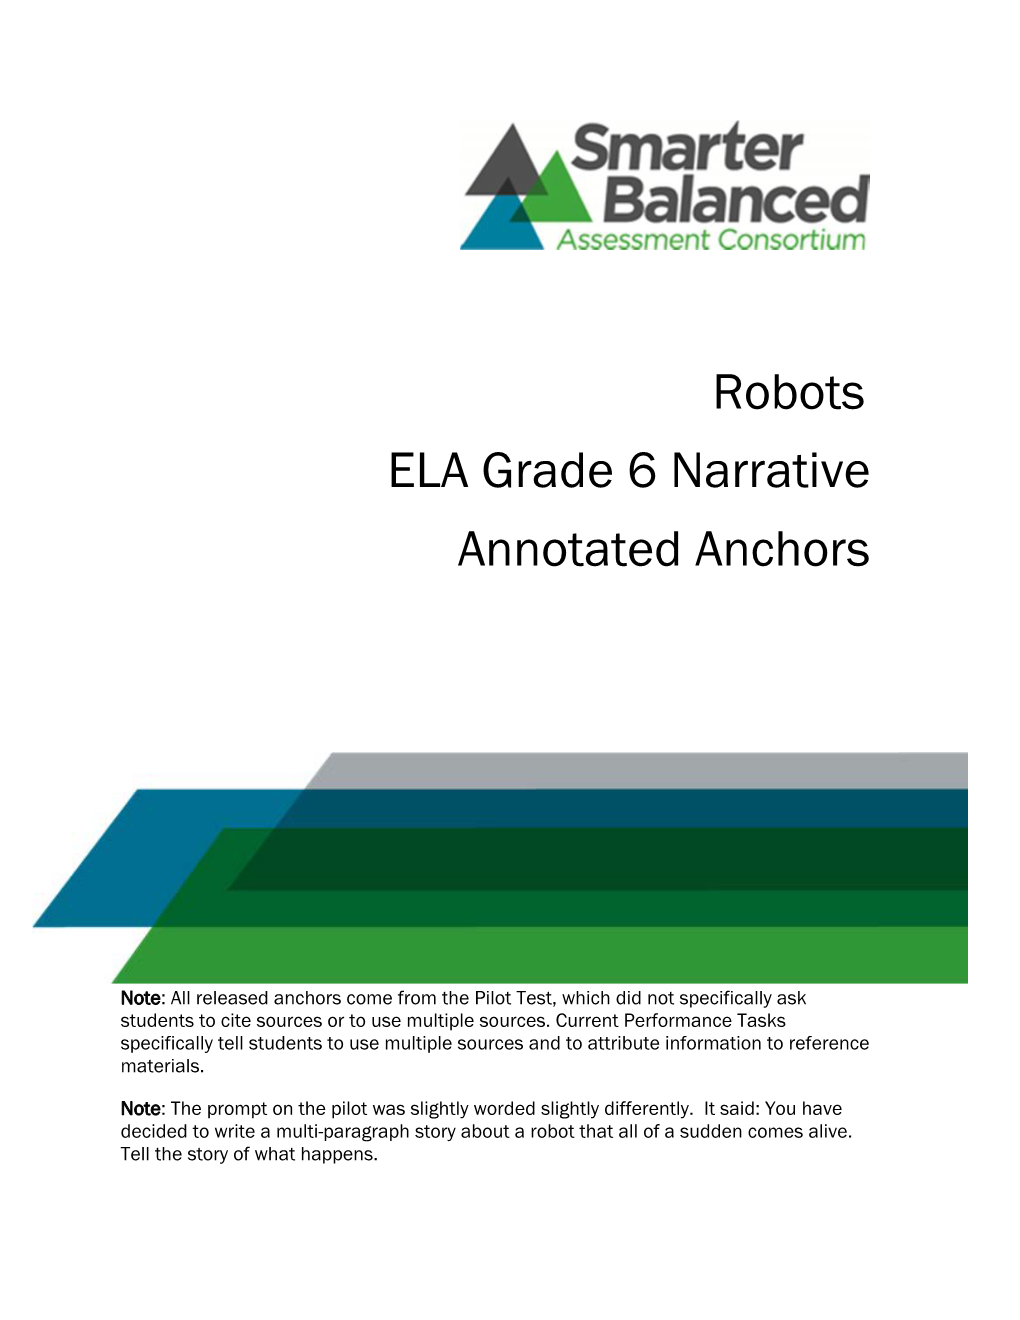 Robots ELA Grade 6 Narrative Annotated Anchors